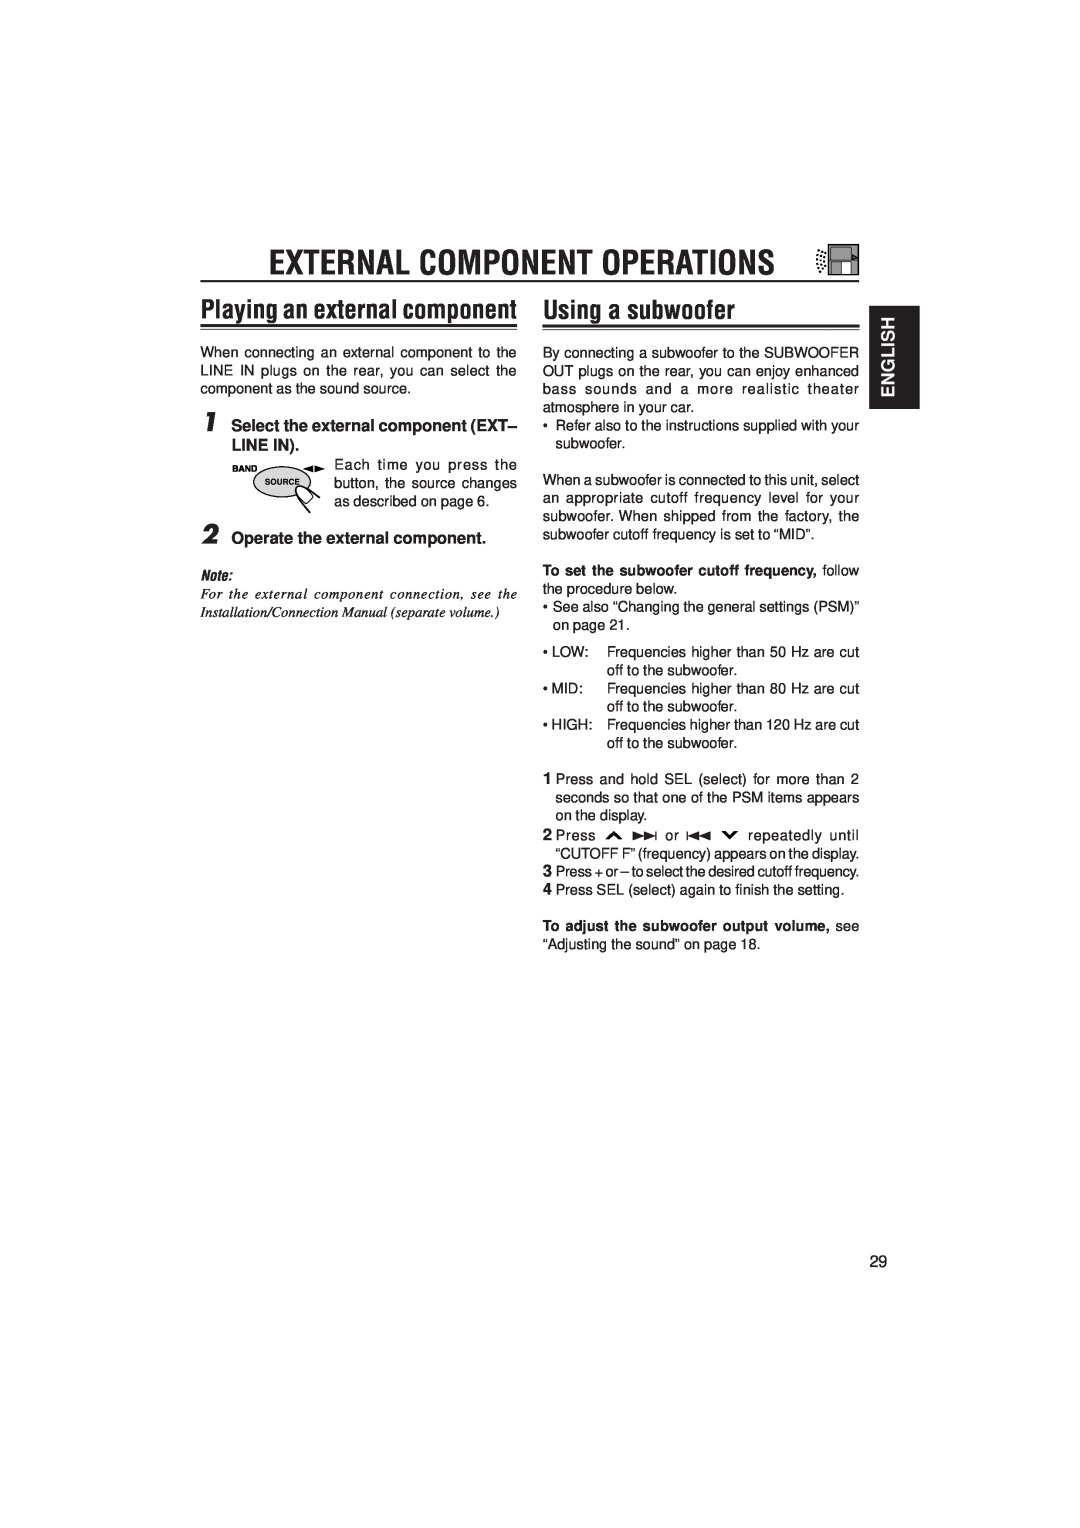 JVC KS-LX200R manual Playing an external componentUsing a subwoofer, External Component Operations, English 